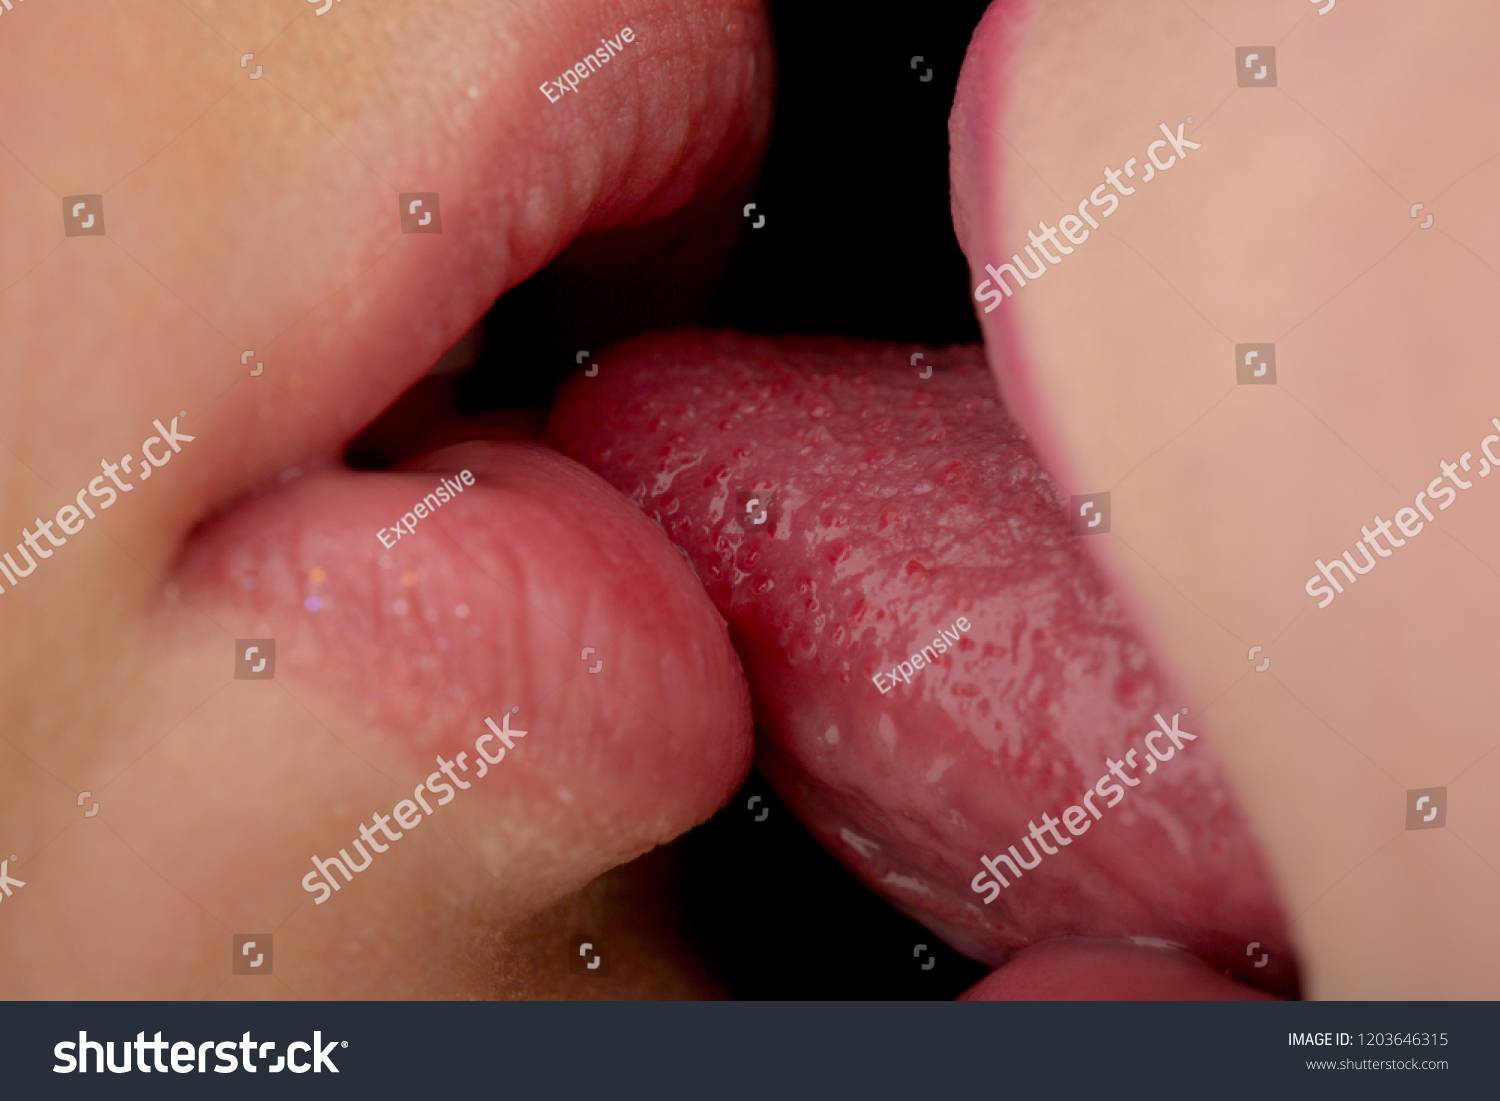 lesbians wet tongue kissing video gallerie photo